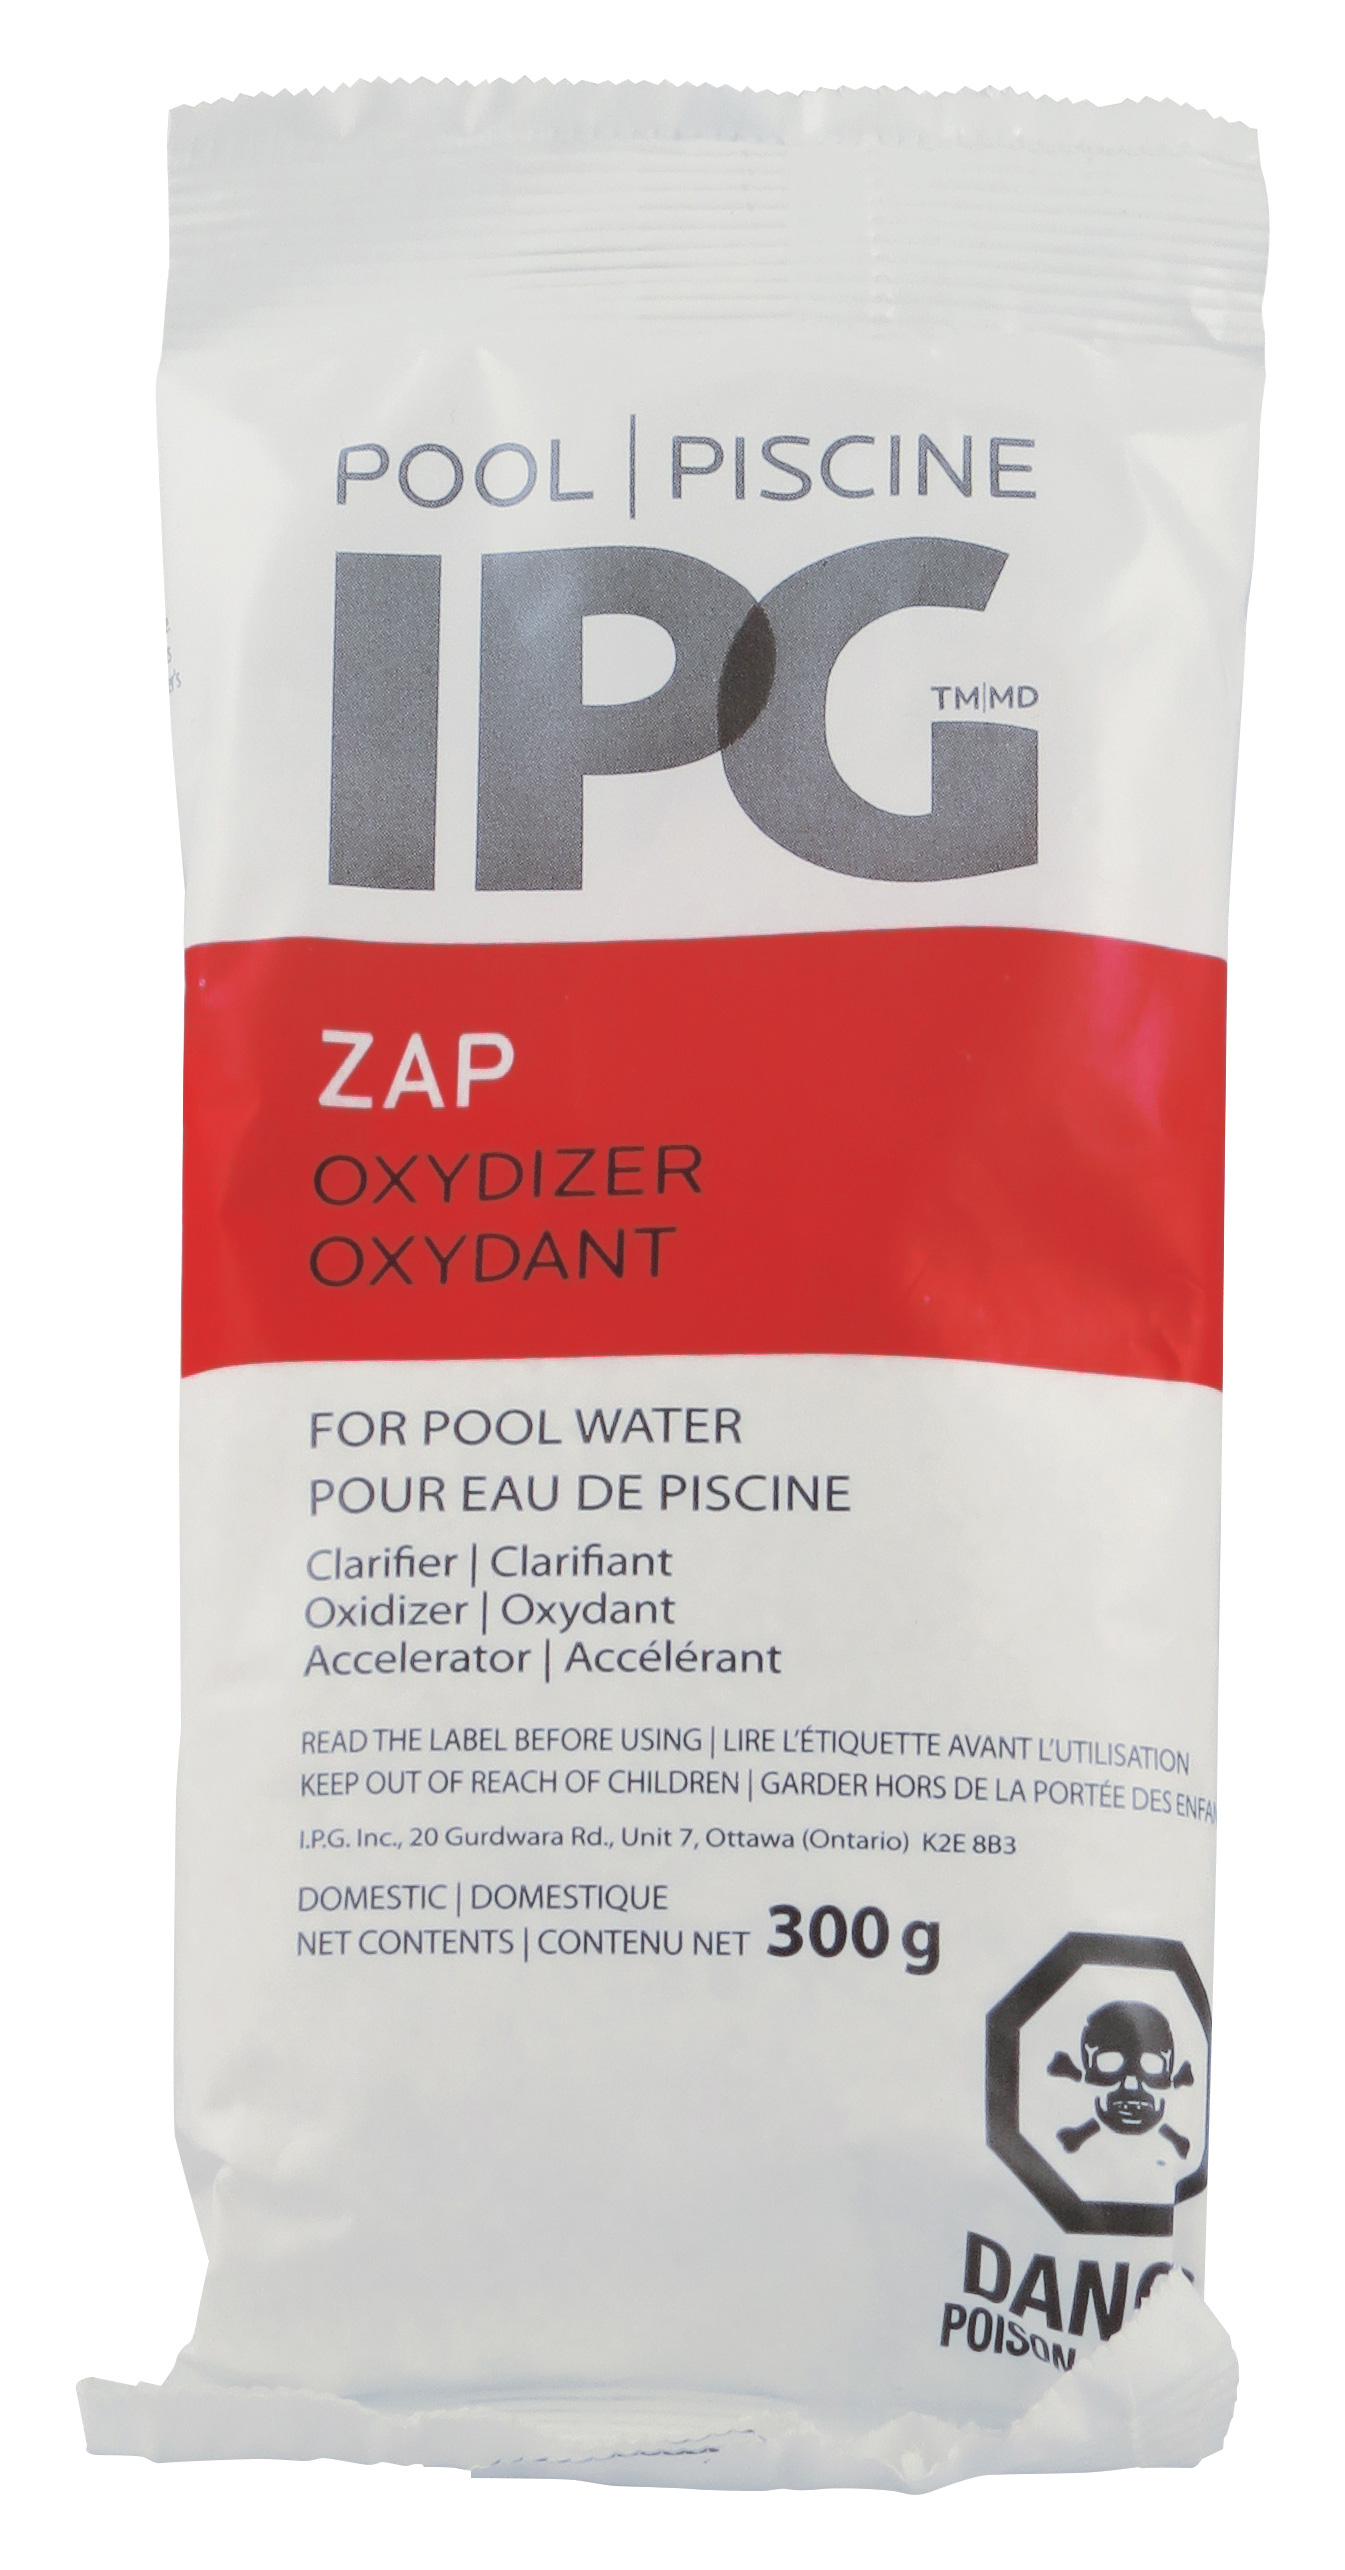 zap oxydizer swimming pool supplies